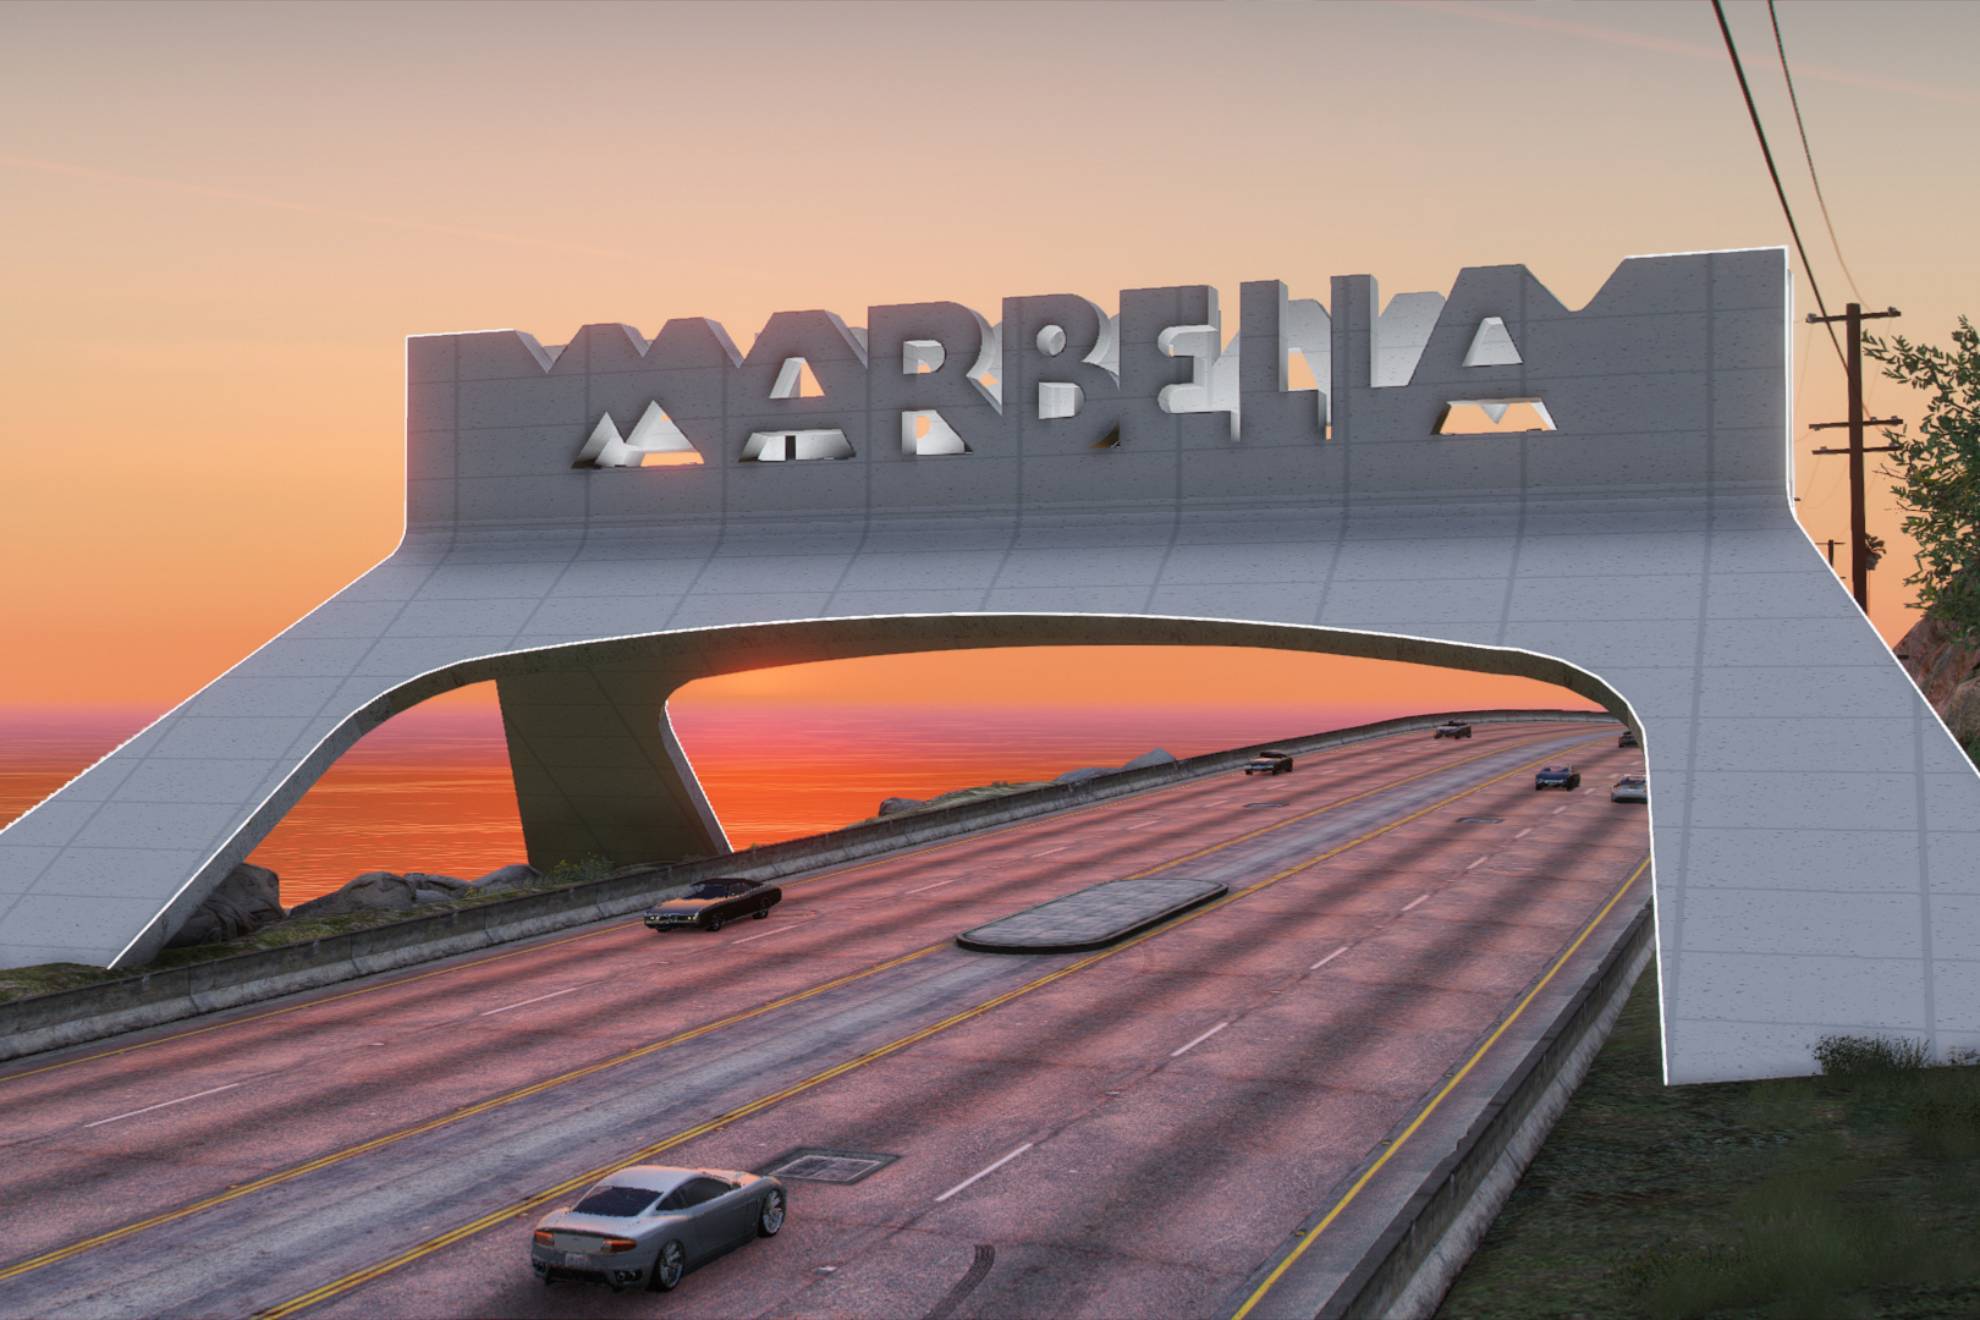 Marbella Vice 2 | Participantes confirmados del famoso GTA Roleplay: AuronPlay, Paul Thin, DjMariio...